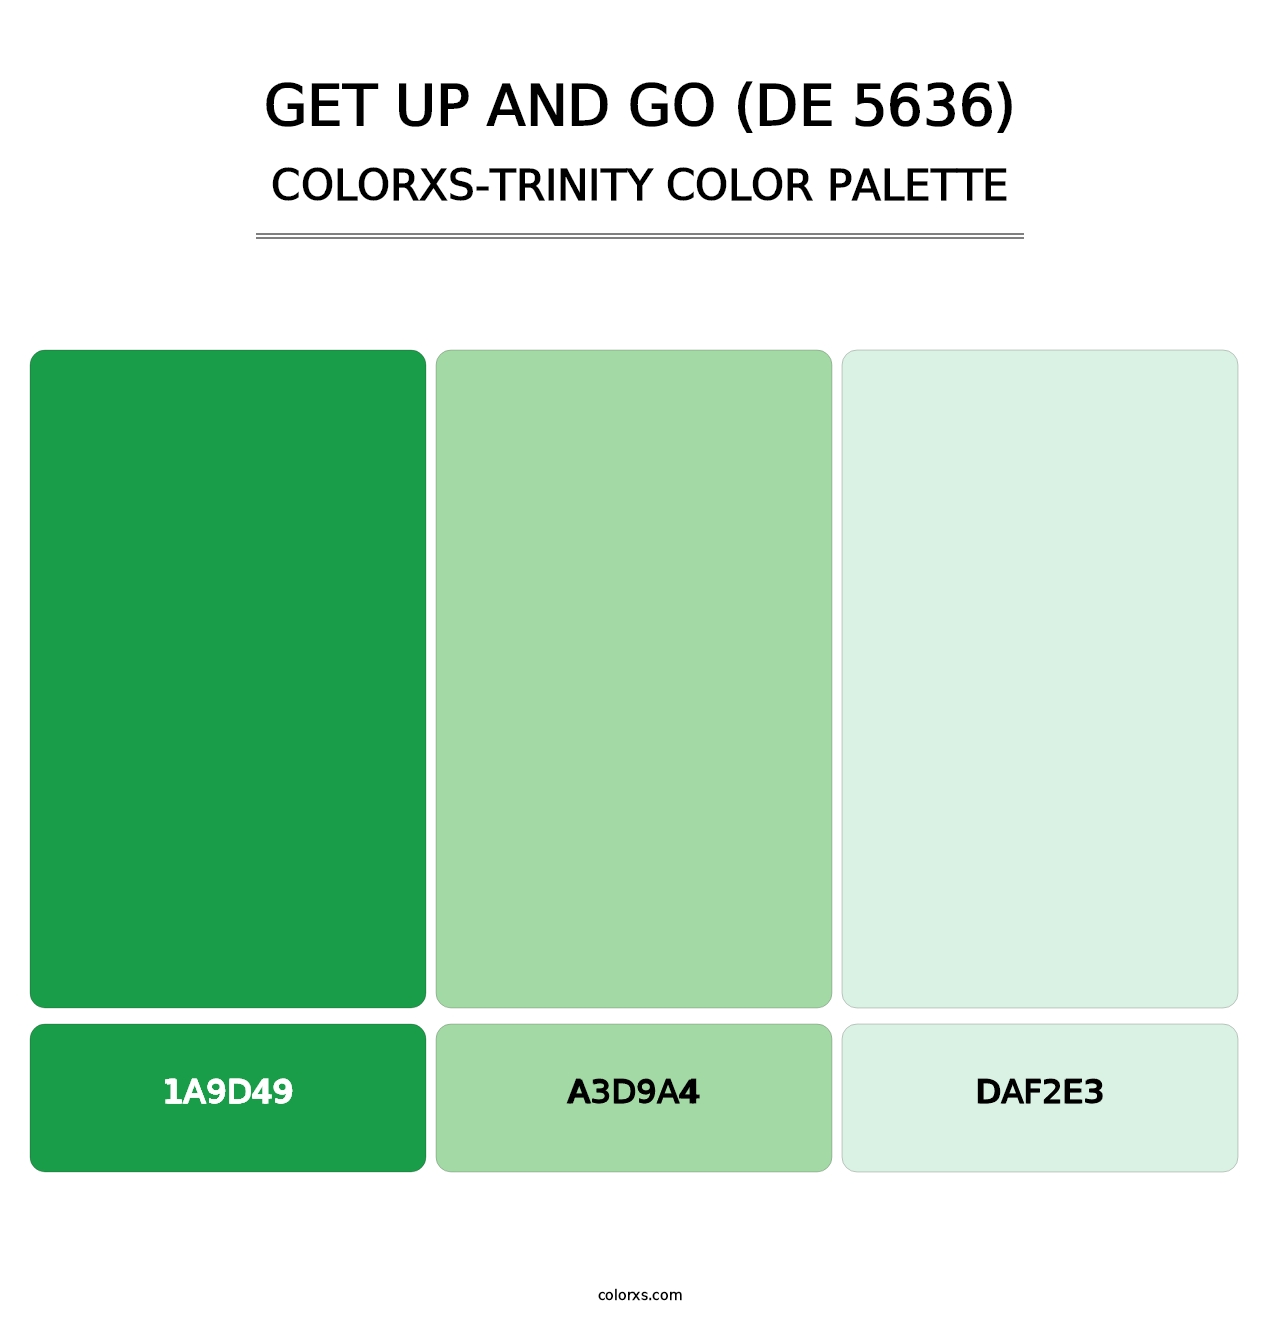 Get Up and Go (DE 5636) - Colorxs Trinity Palette